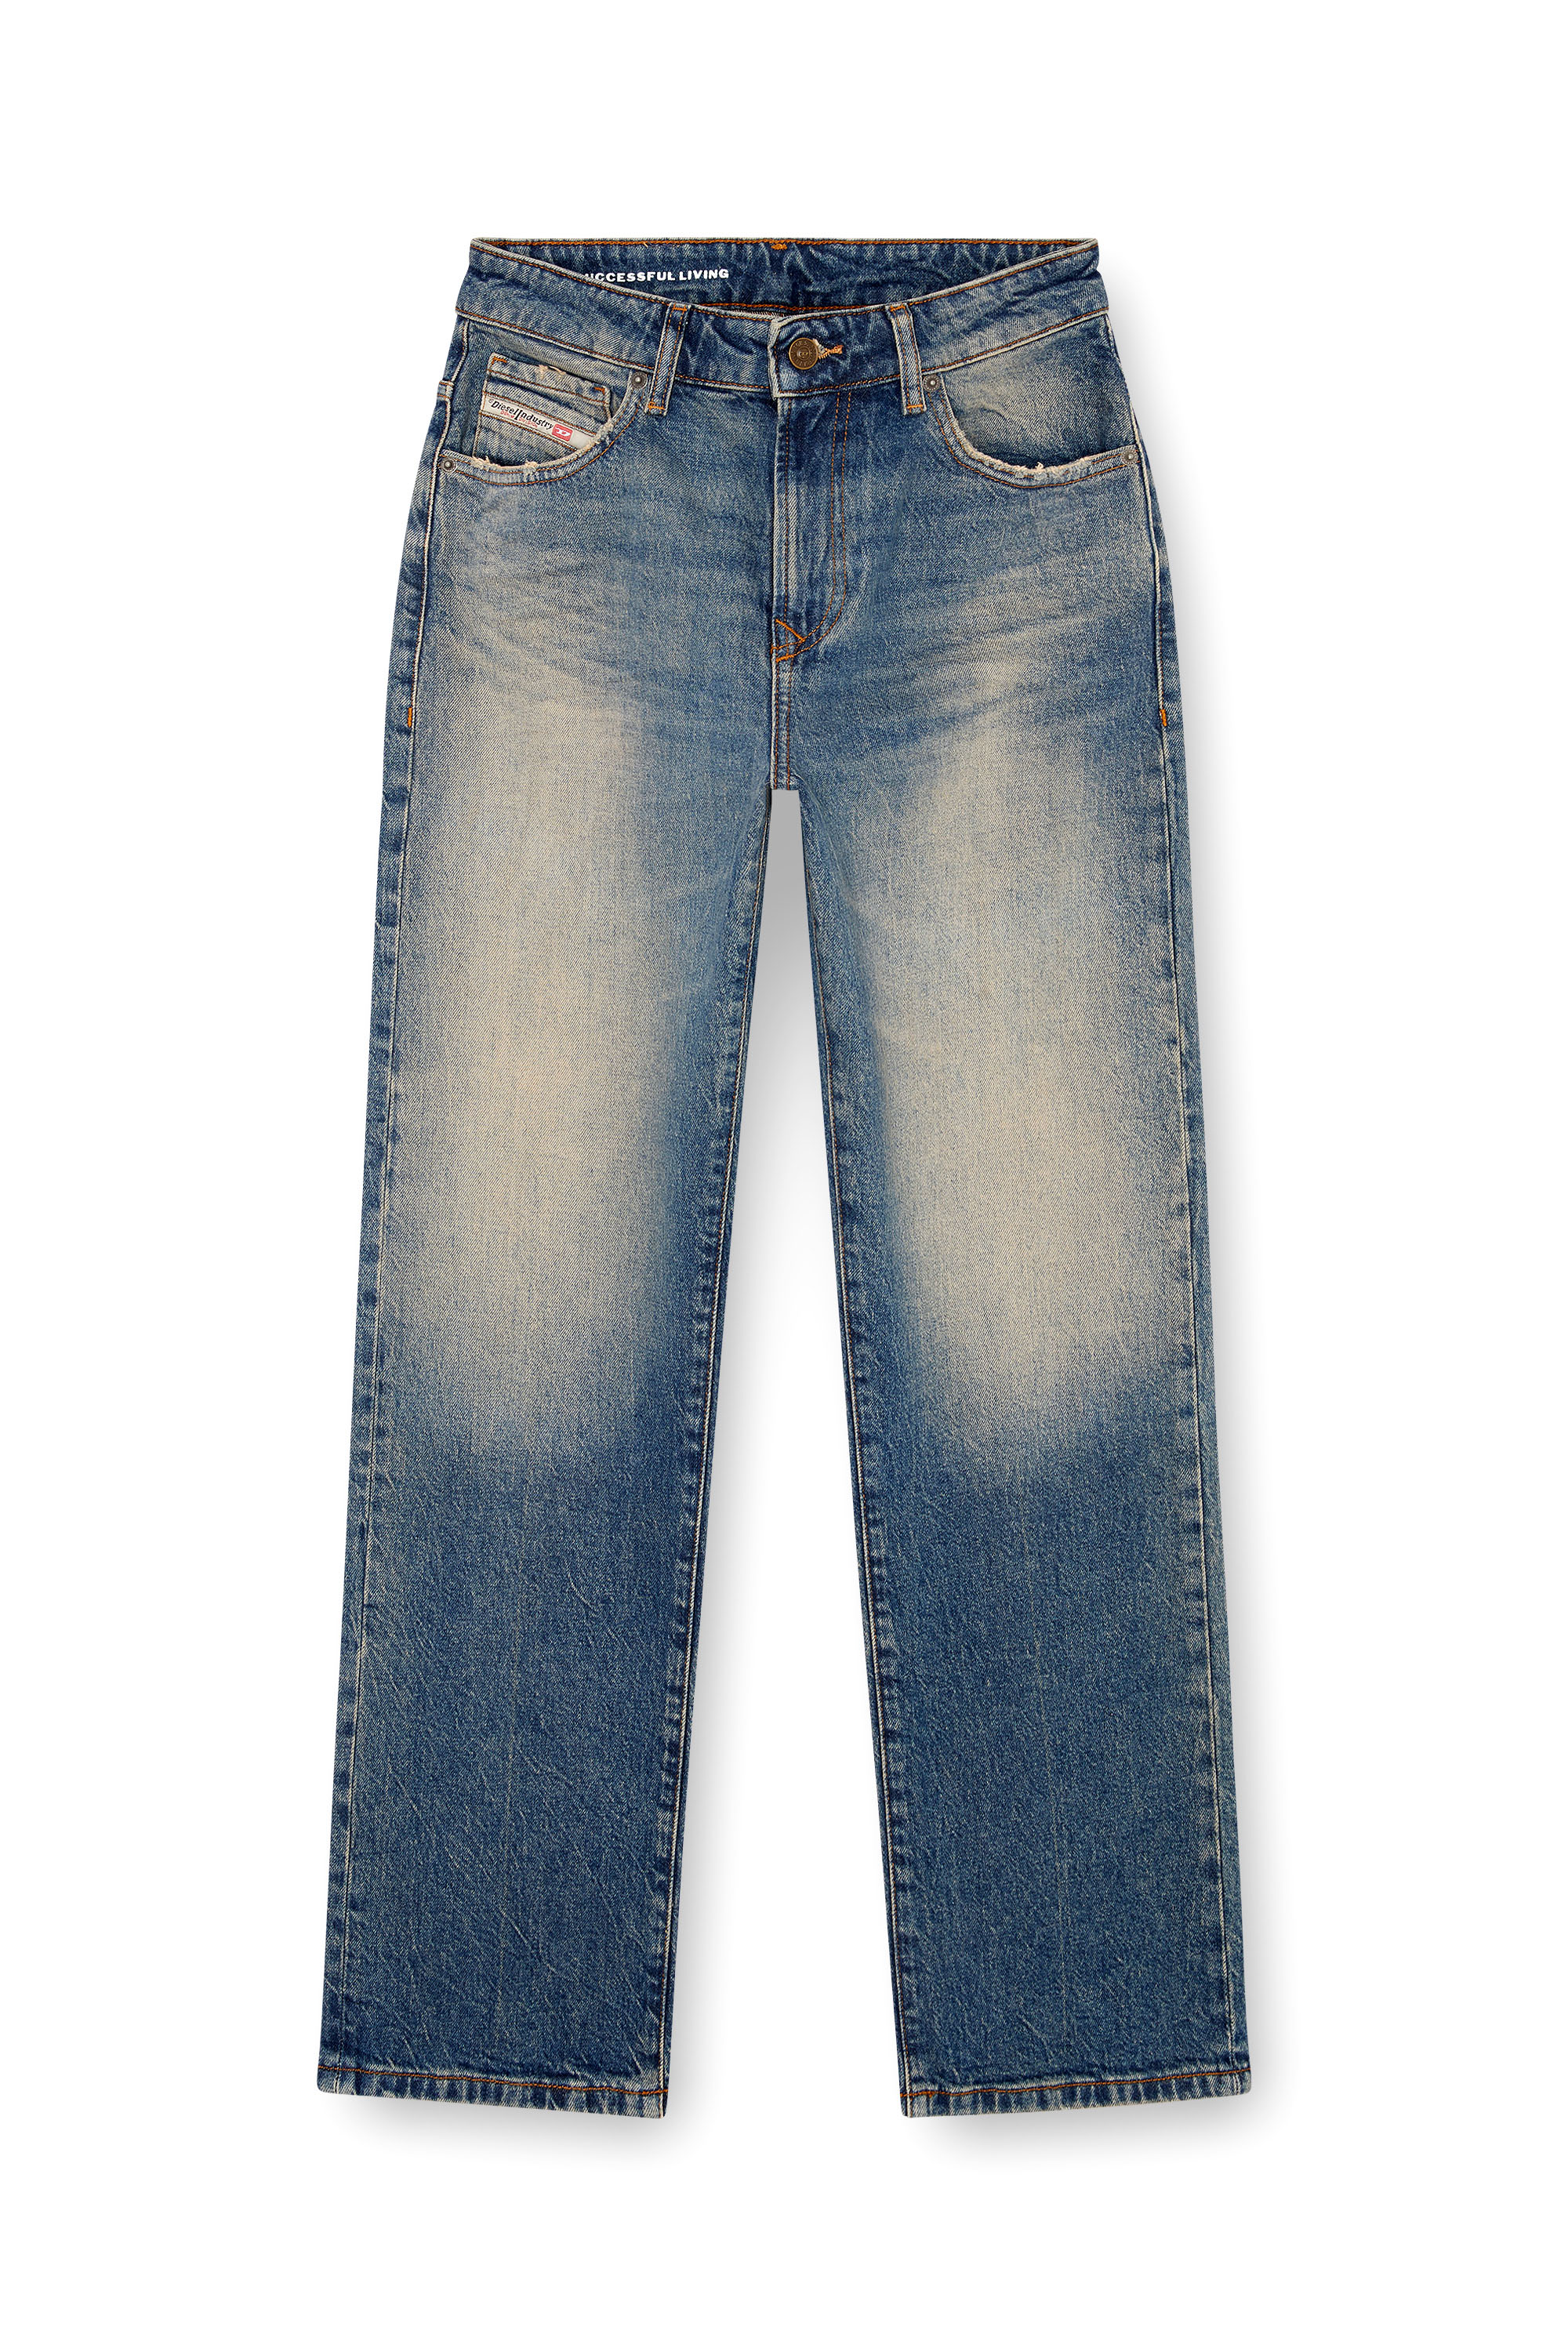 Diesel - Straight Jeans 1999 D-Reggy 0GRDH, Mujer Straight Jeans - 1999 D-Reggy in Azul marino - Image 5